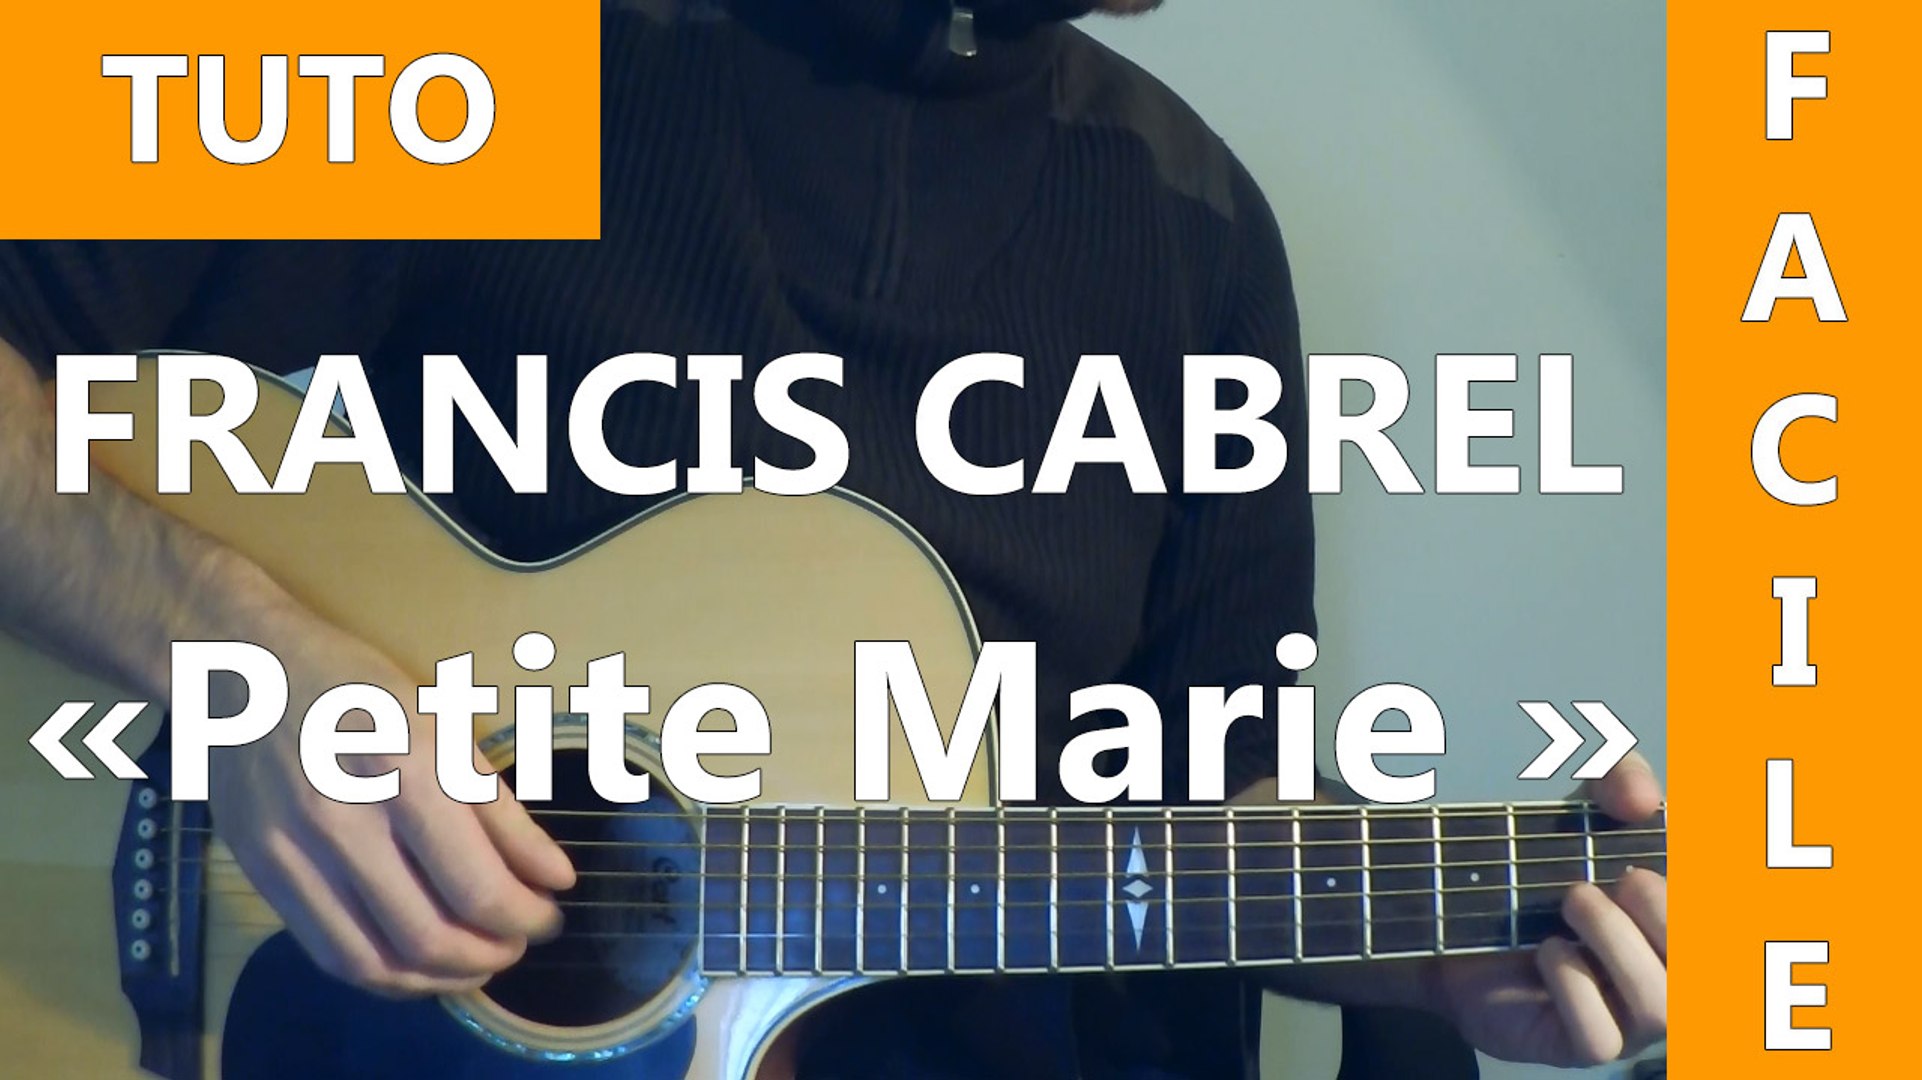 Francis Cabrel - Petite Marie - Cours de Guitare ( Facile ) - Vidéo  Dailymotion